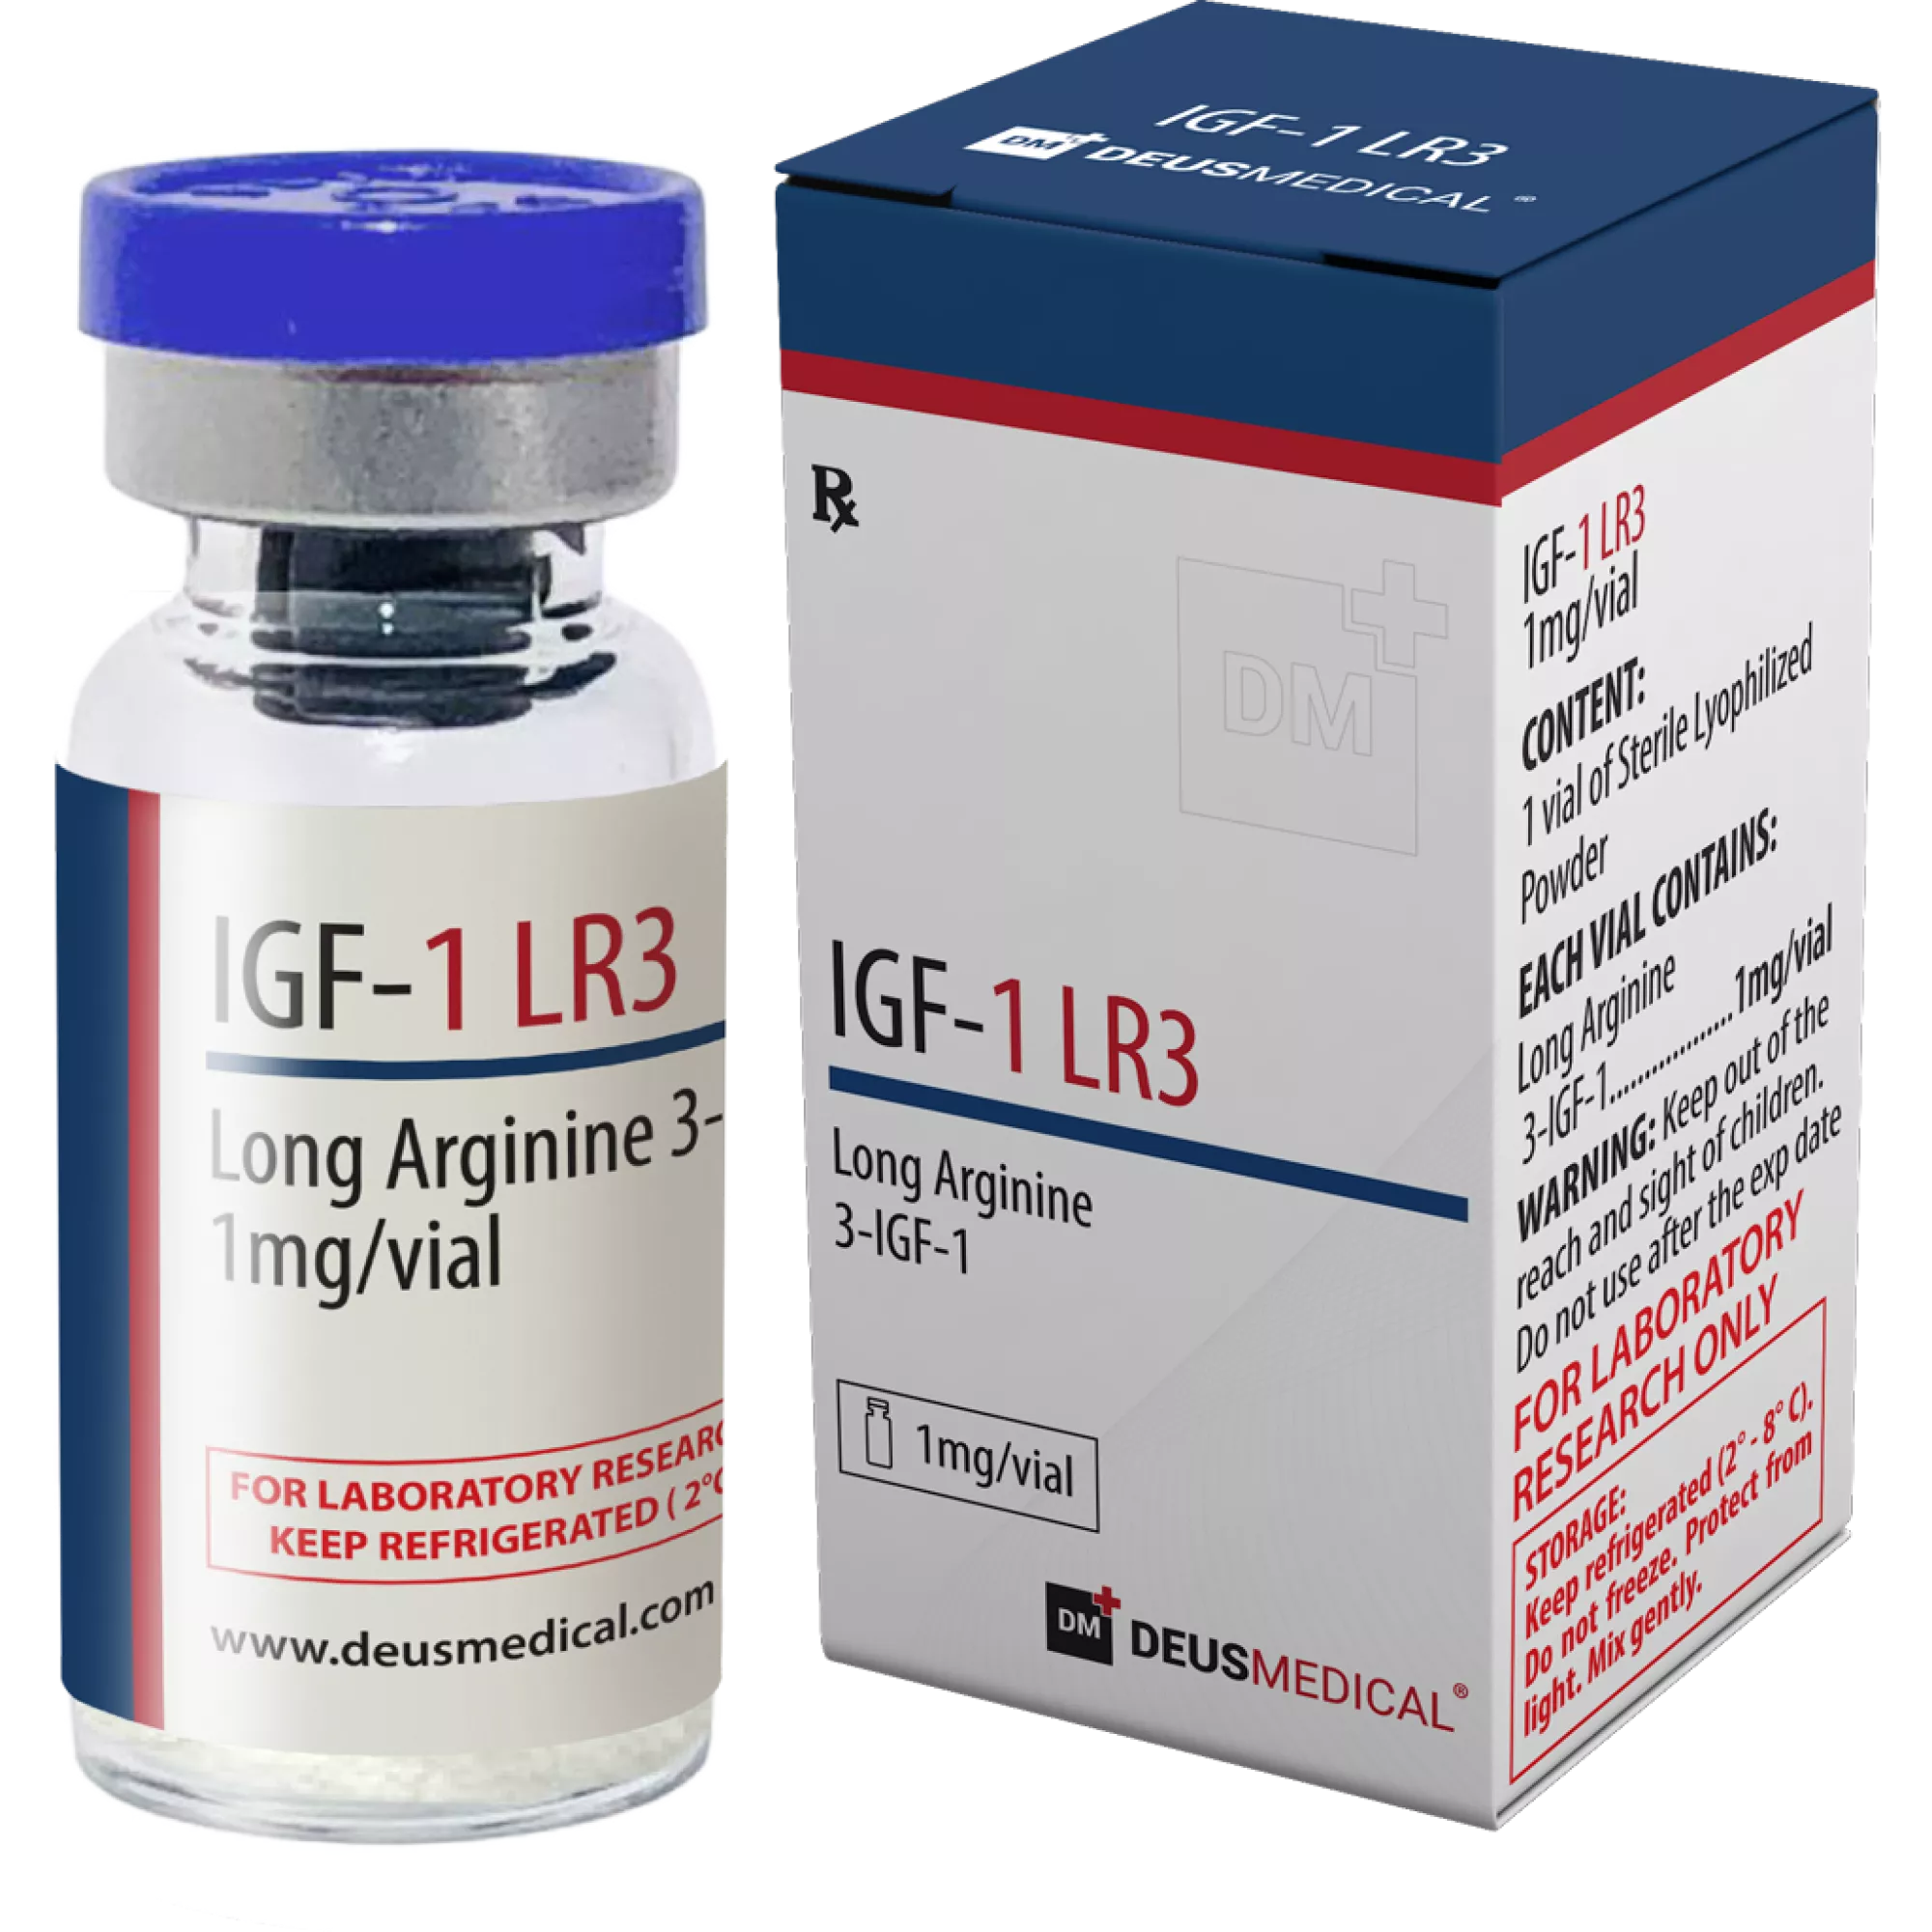 IGF-1 LR3 (Long Arginine 3-IGHF-1), Deus Medical, Köp steroider online - www.deuspower.shop